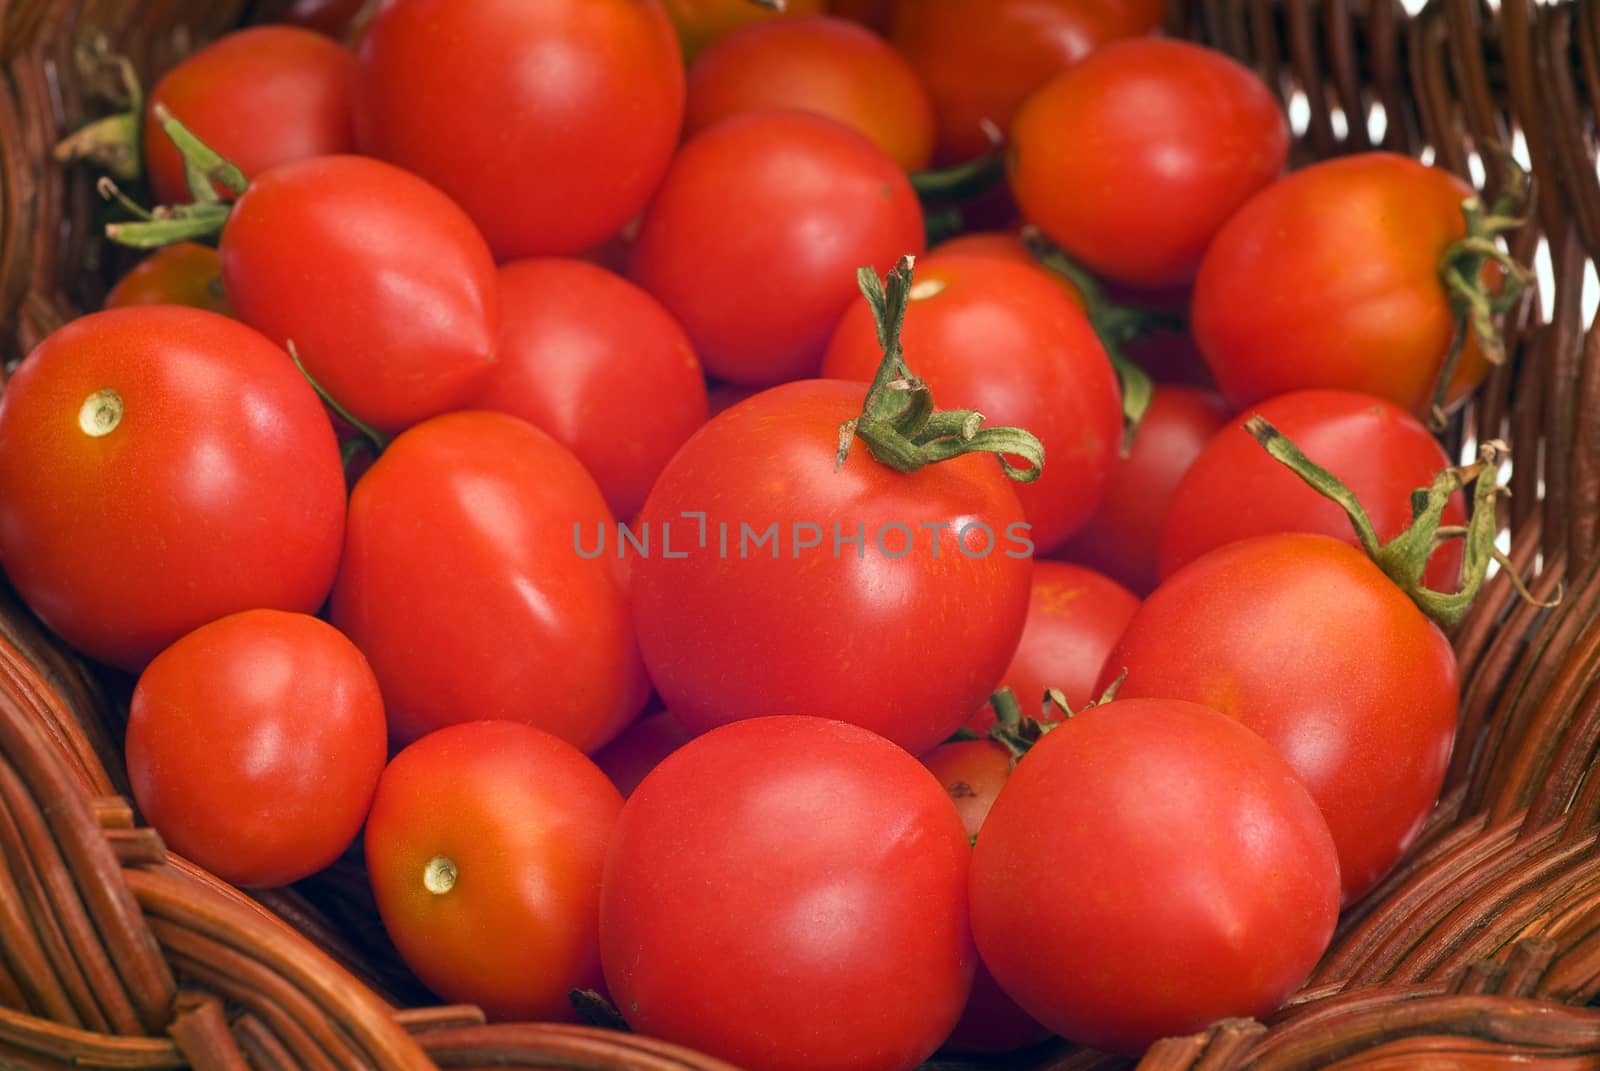 Tomatoes In A Wicker Cornucopia Basket by stockbuster1